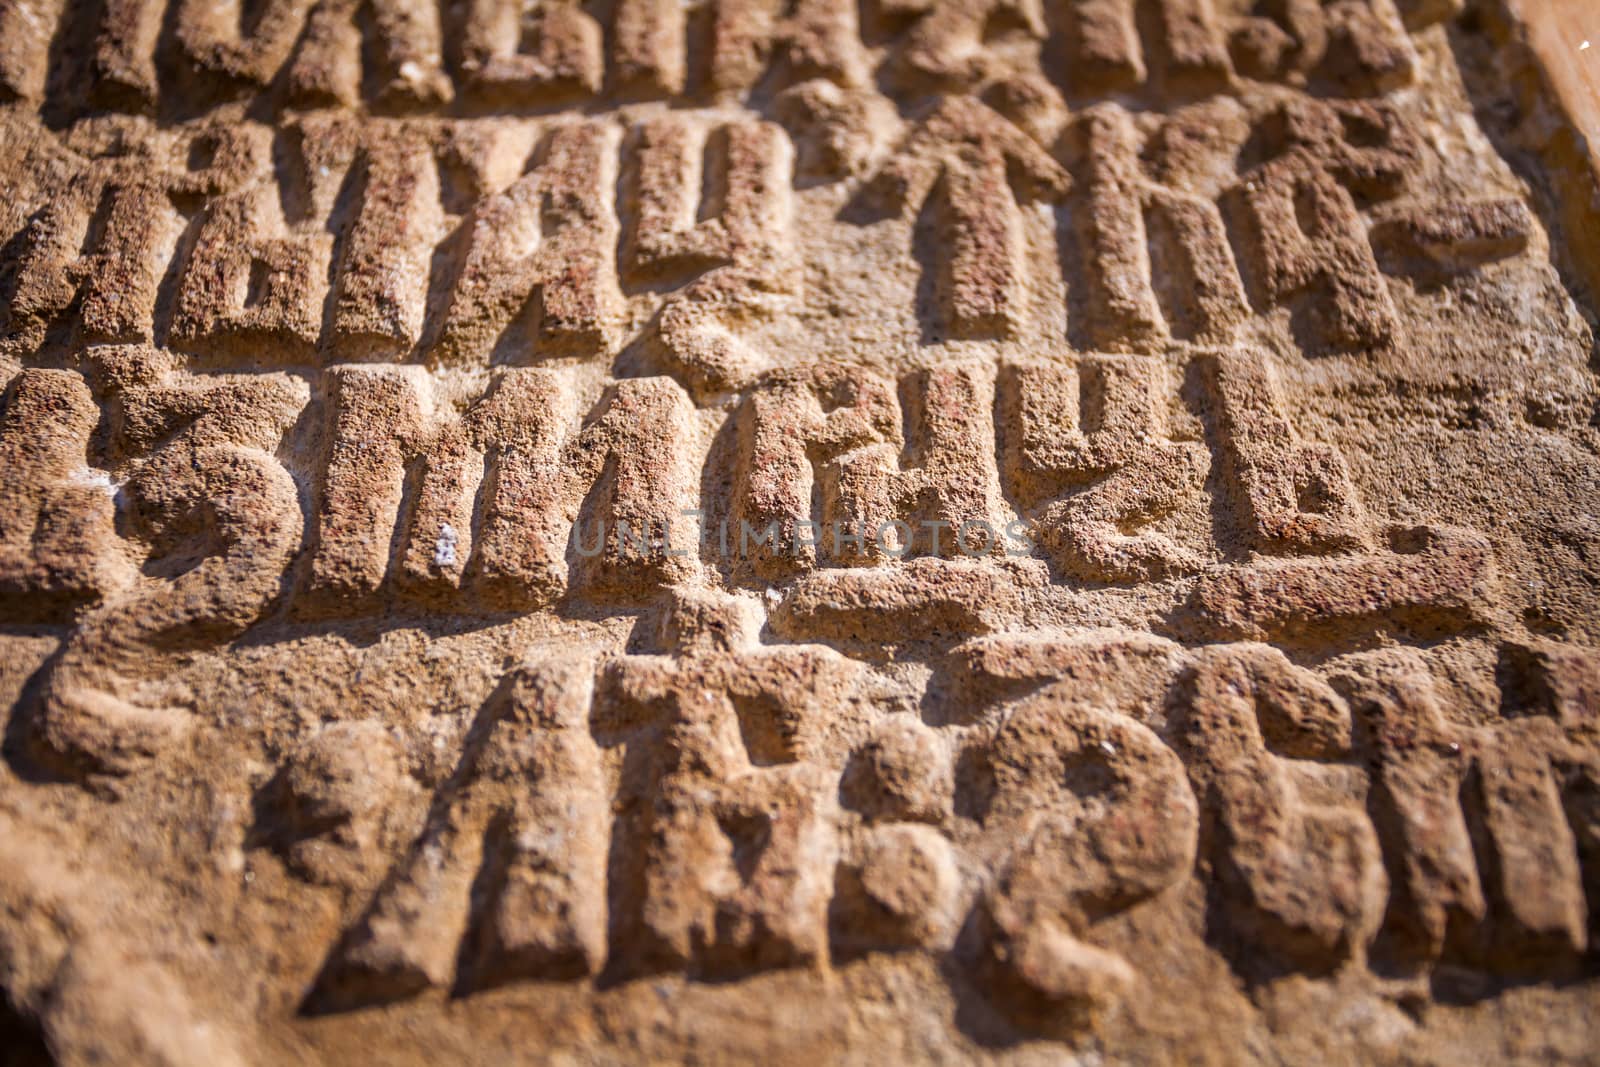 Polovragi, Romania - Septemper 9, 2012: Old orthodox cyrilic text carved on Plolvragi monastery wall, Romania